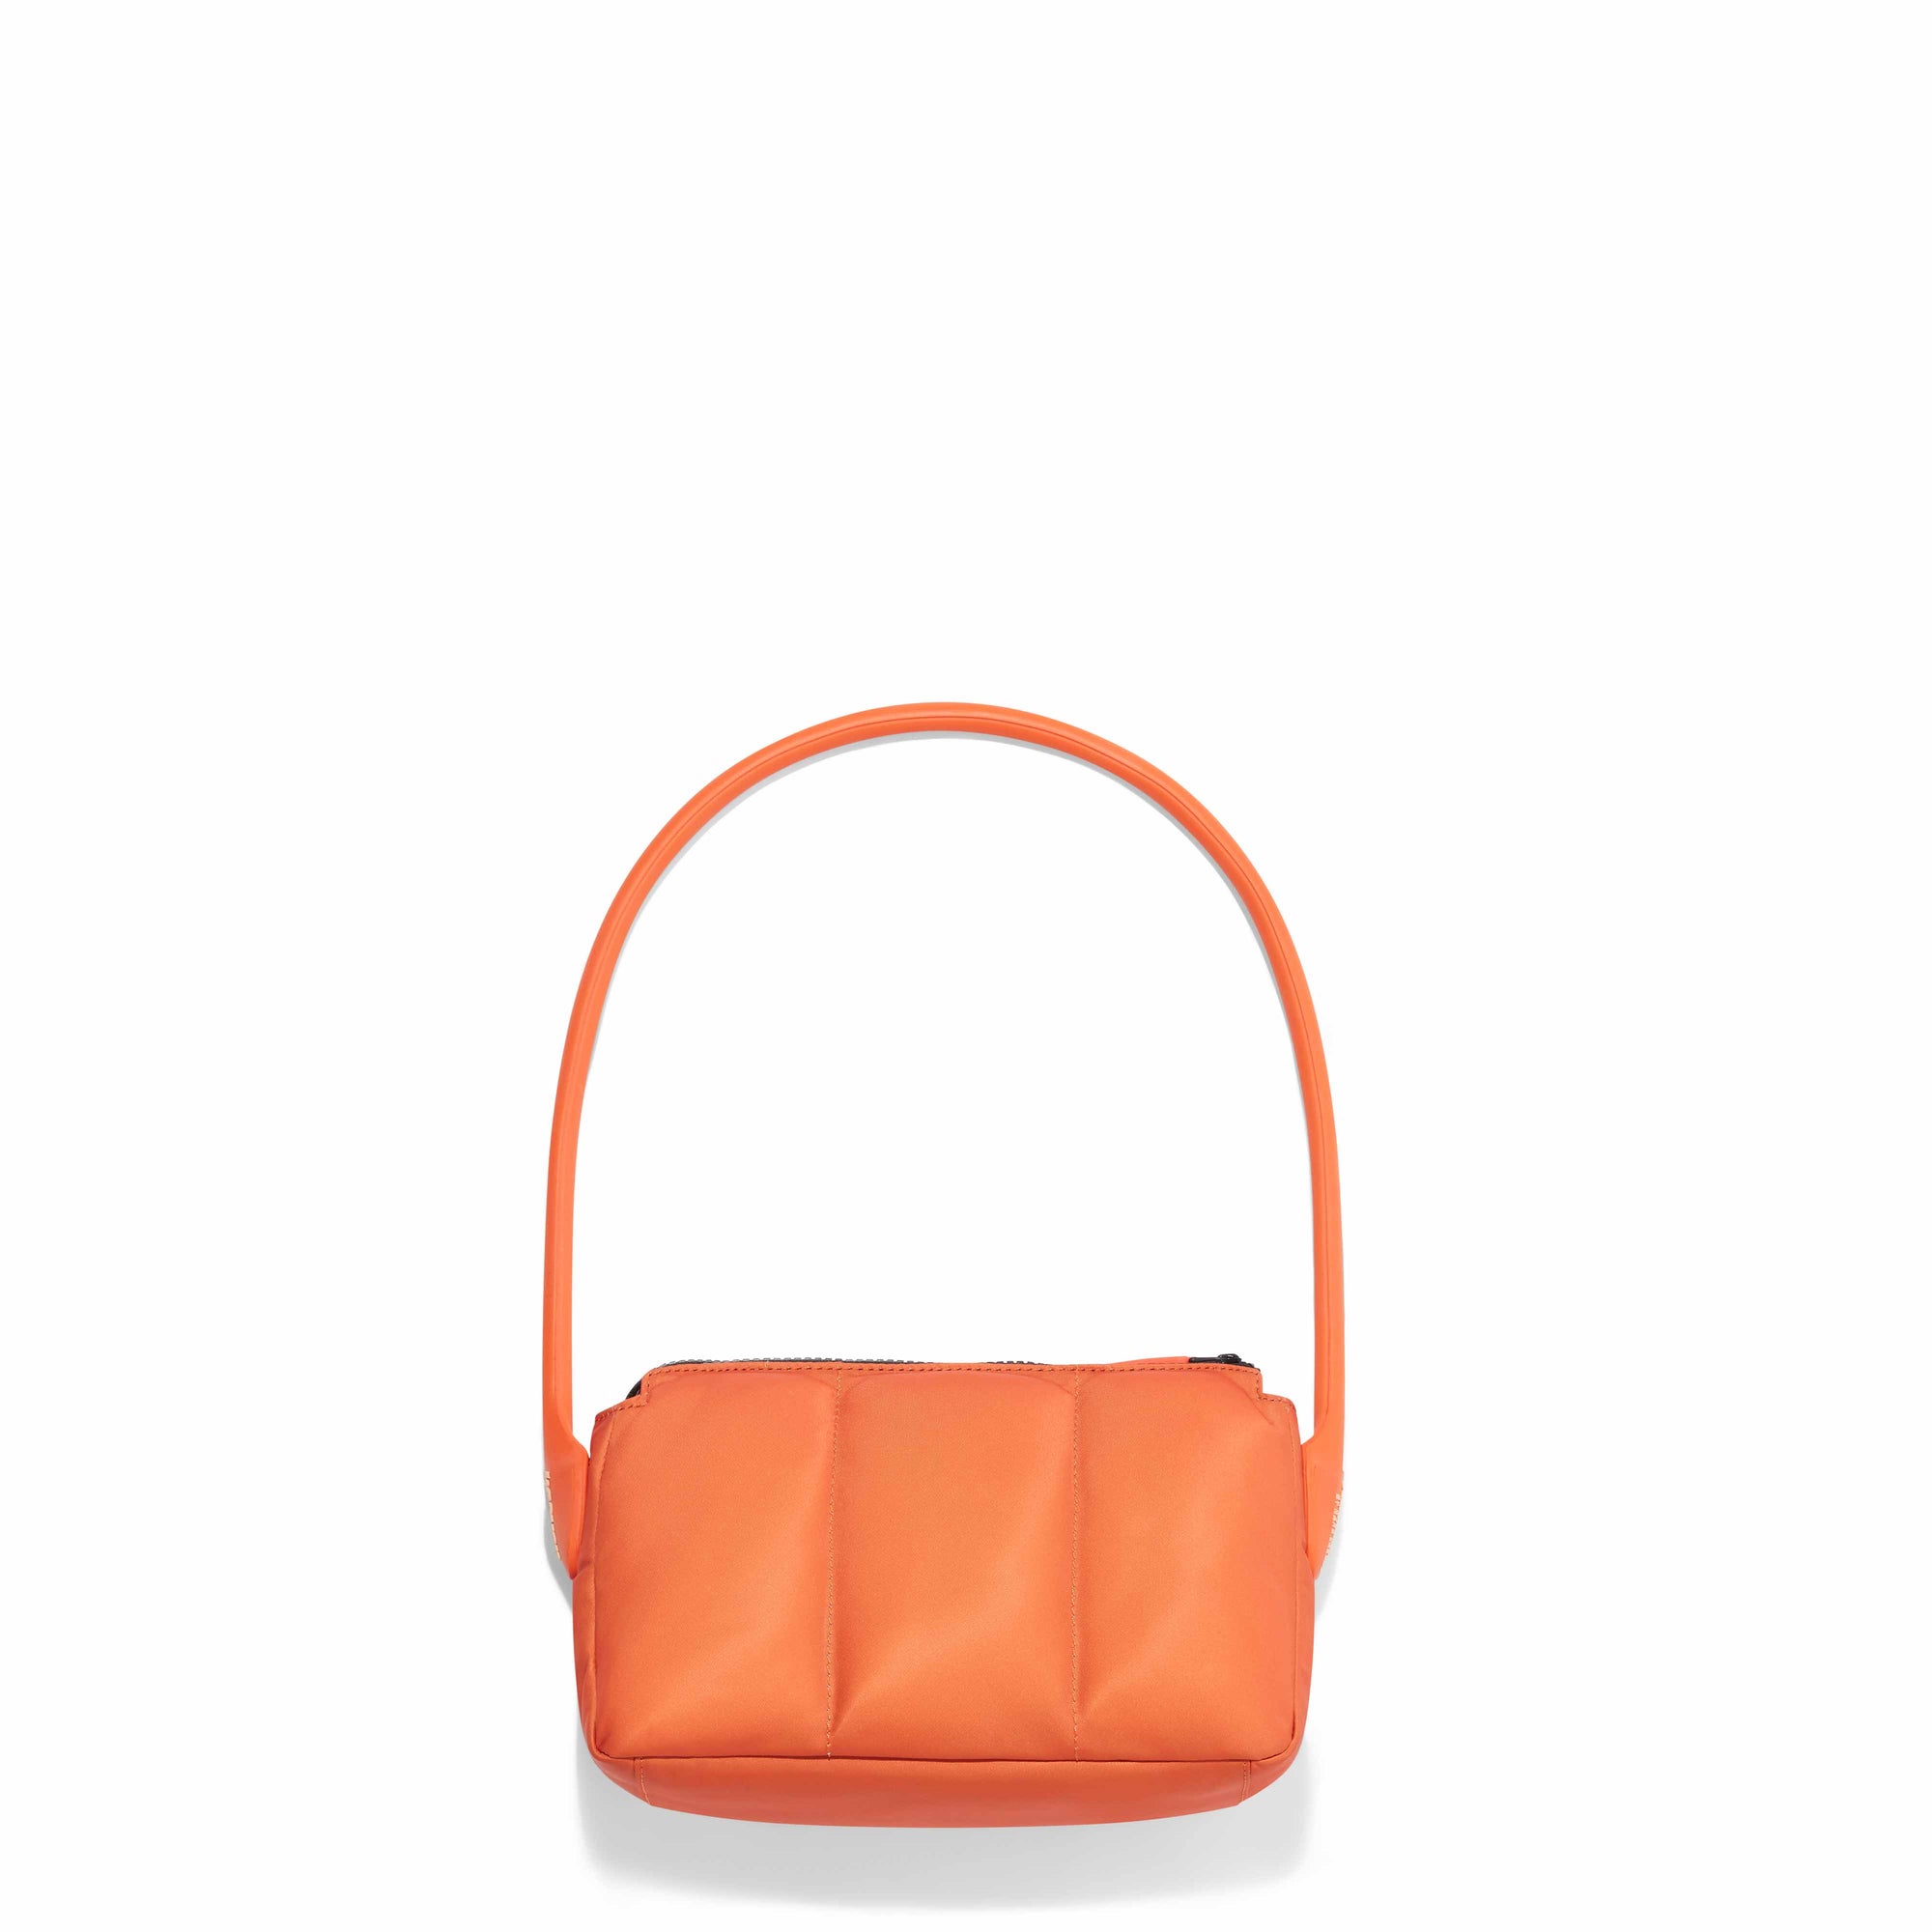 Heaven by Marc Jacobs - Women’s Shoulder Bag - (Burnt Orange) view 2